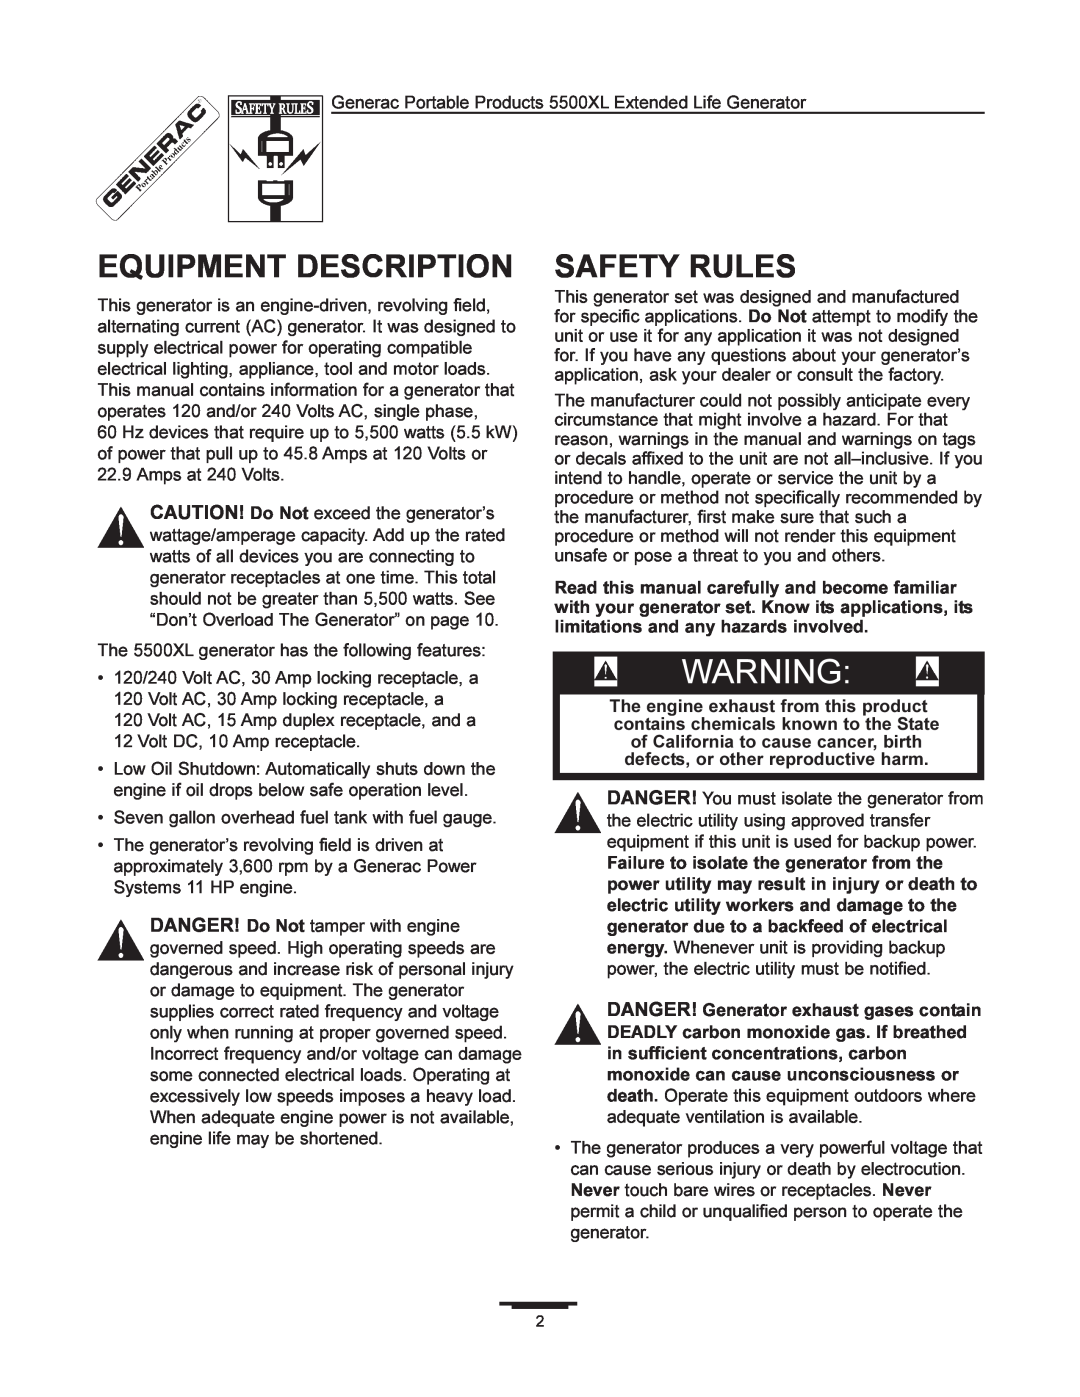 Generac 5500XL manual Equipment Description, Safety Rules 